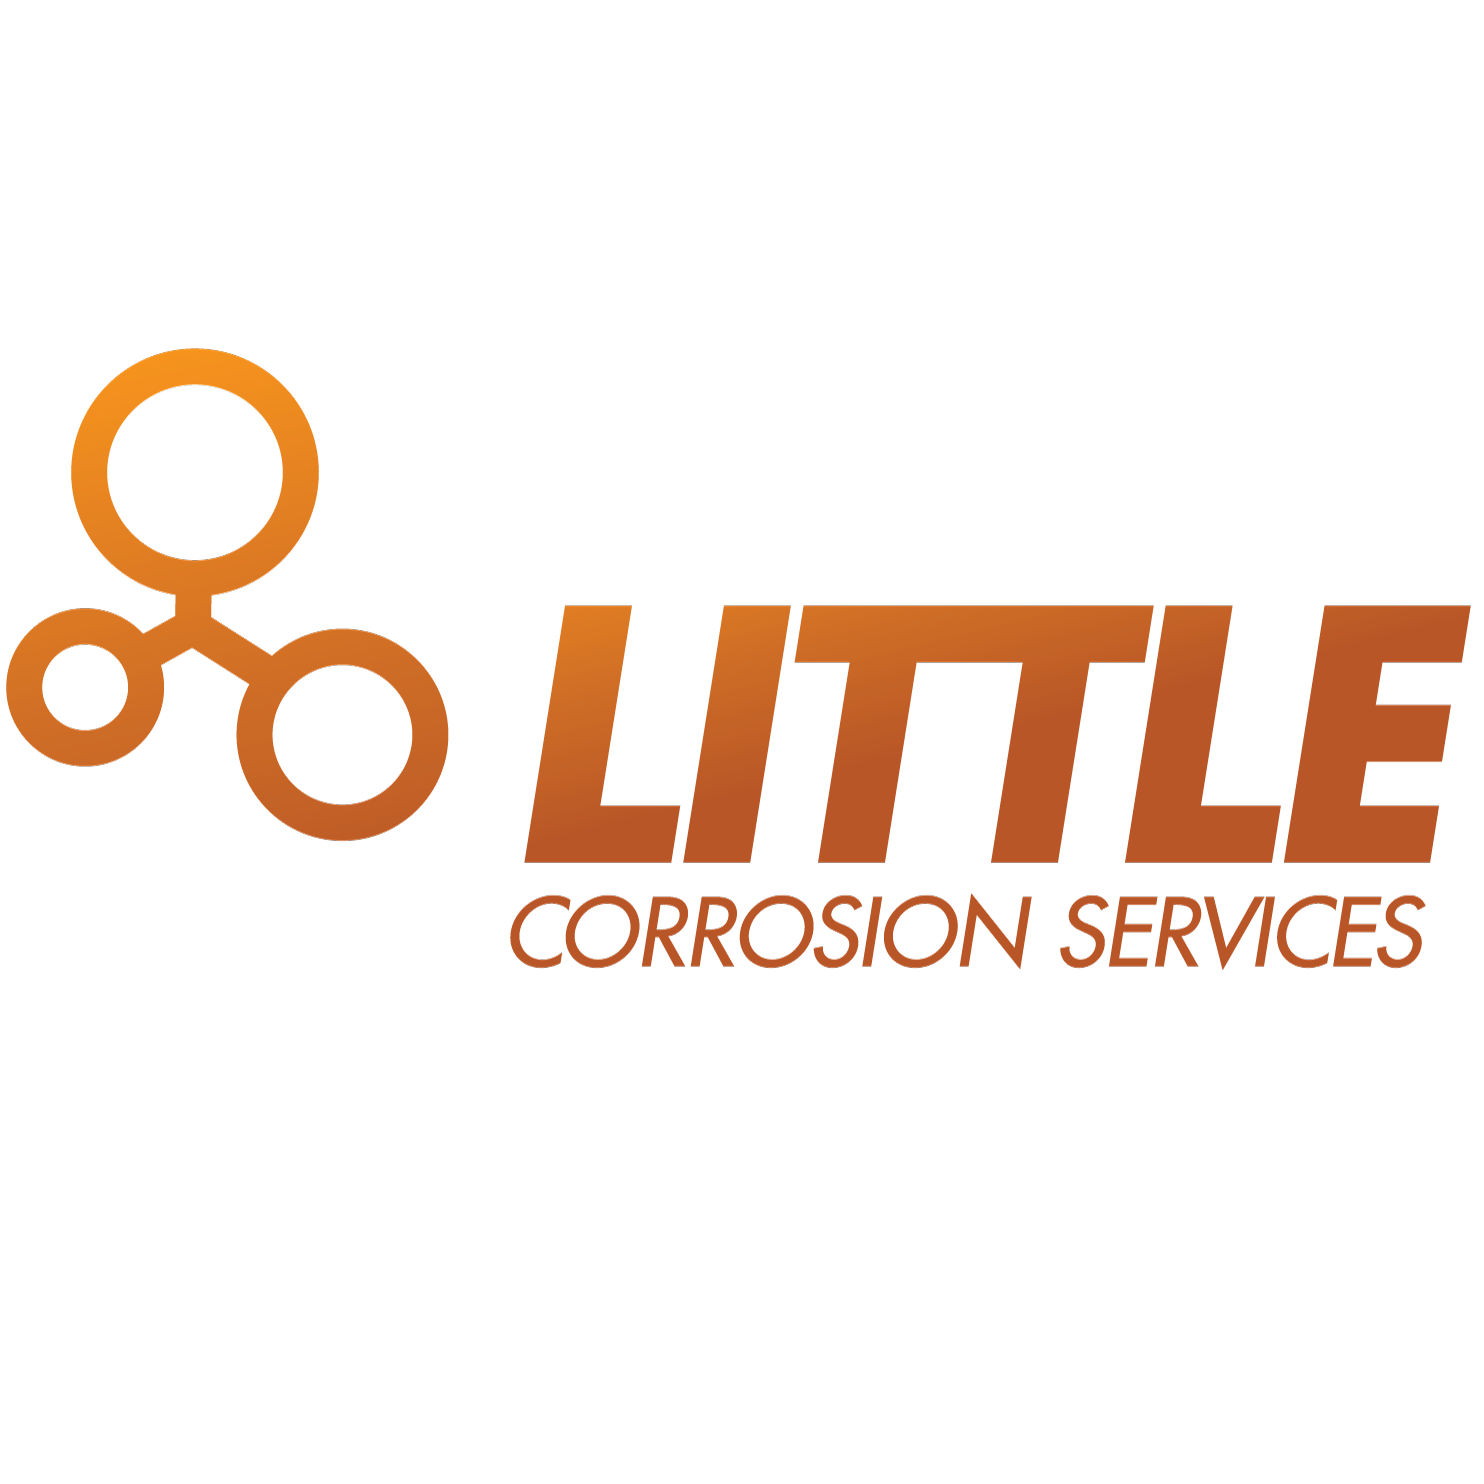 Little Corrosion Services